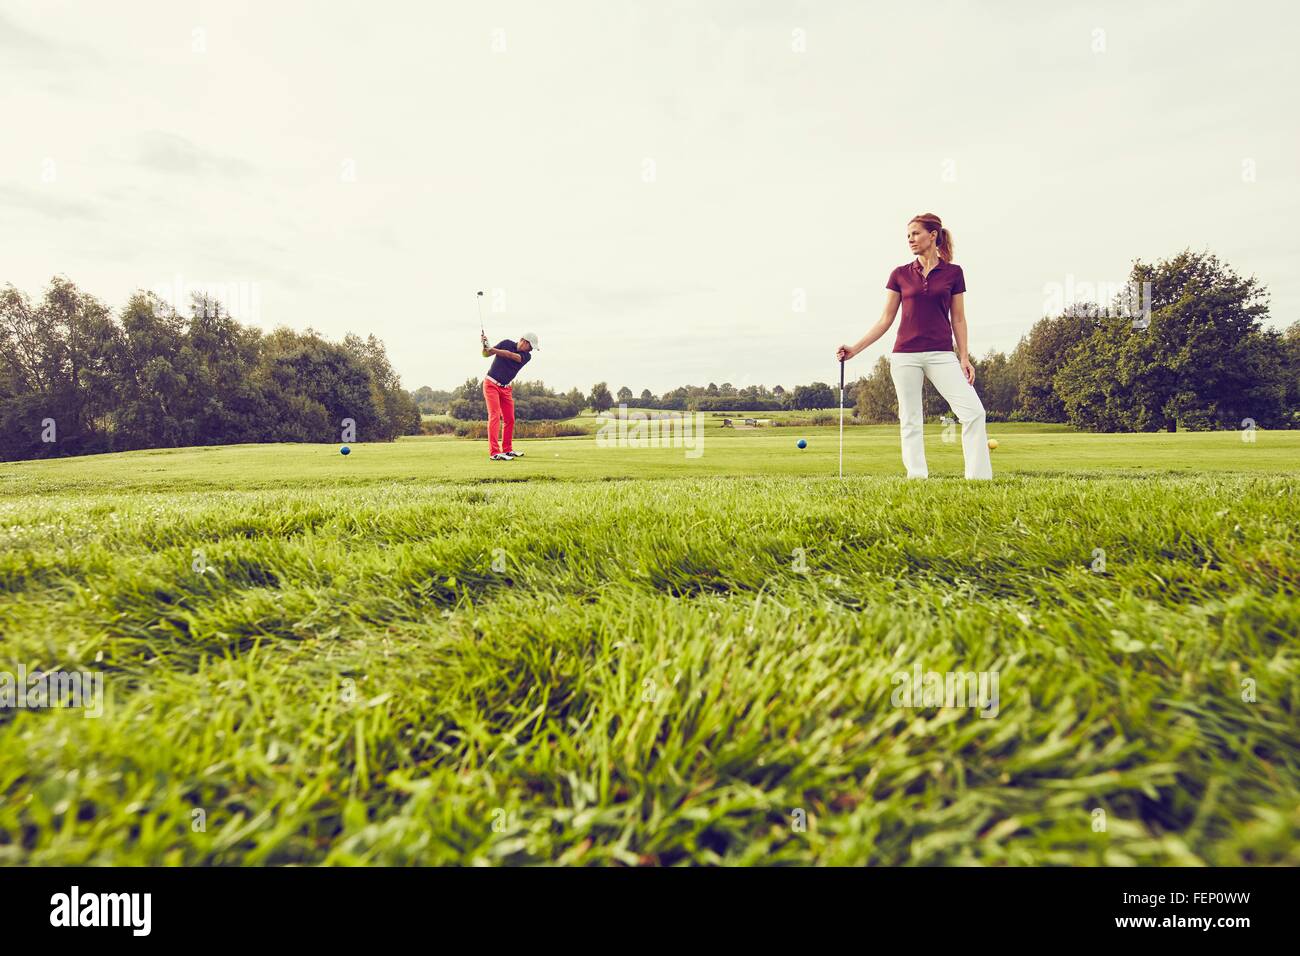 Golfers playing golf on course, Korschenbroich, Dusseldorf, Germany Stock Photo